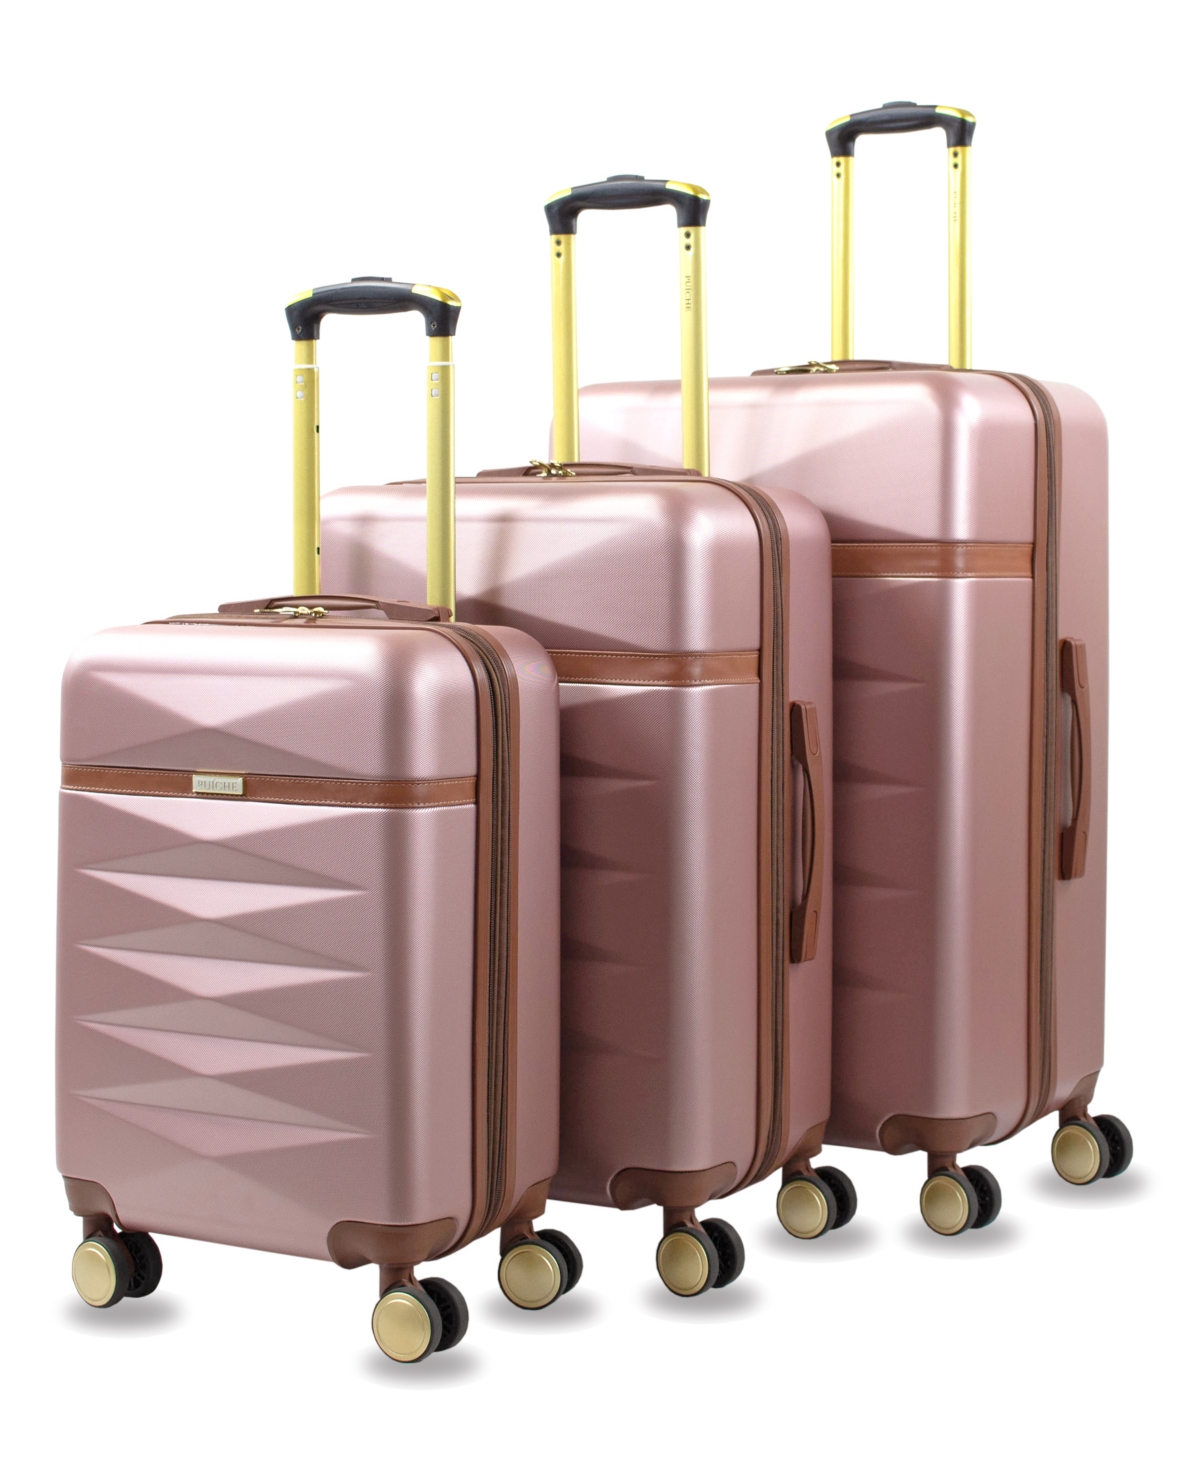 Luggage and Bag Set Black Dustproof Bag Hangers 4 Piece Luggage Set with Spinner Wheels Hardshell Suitcases Set W/ Backpack 